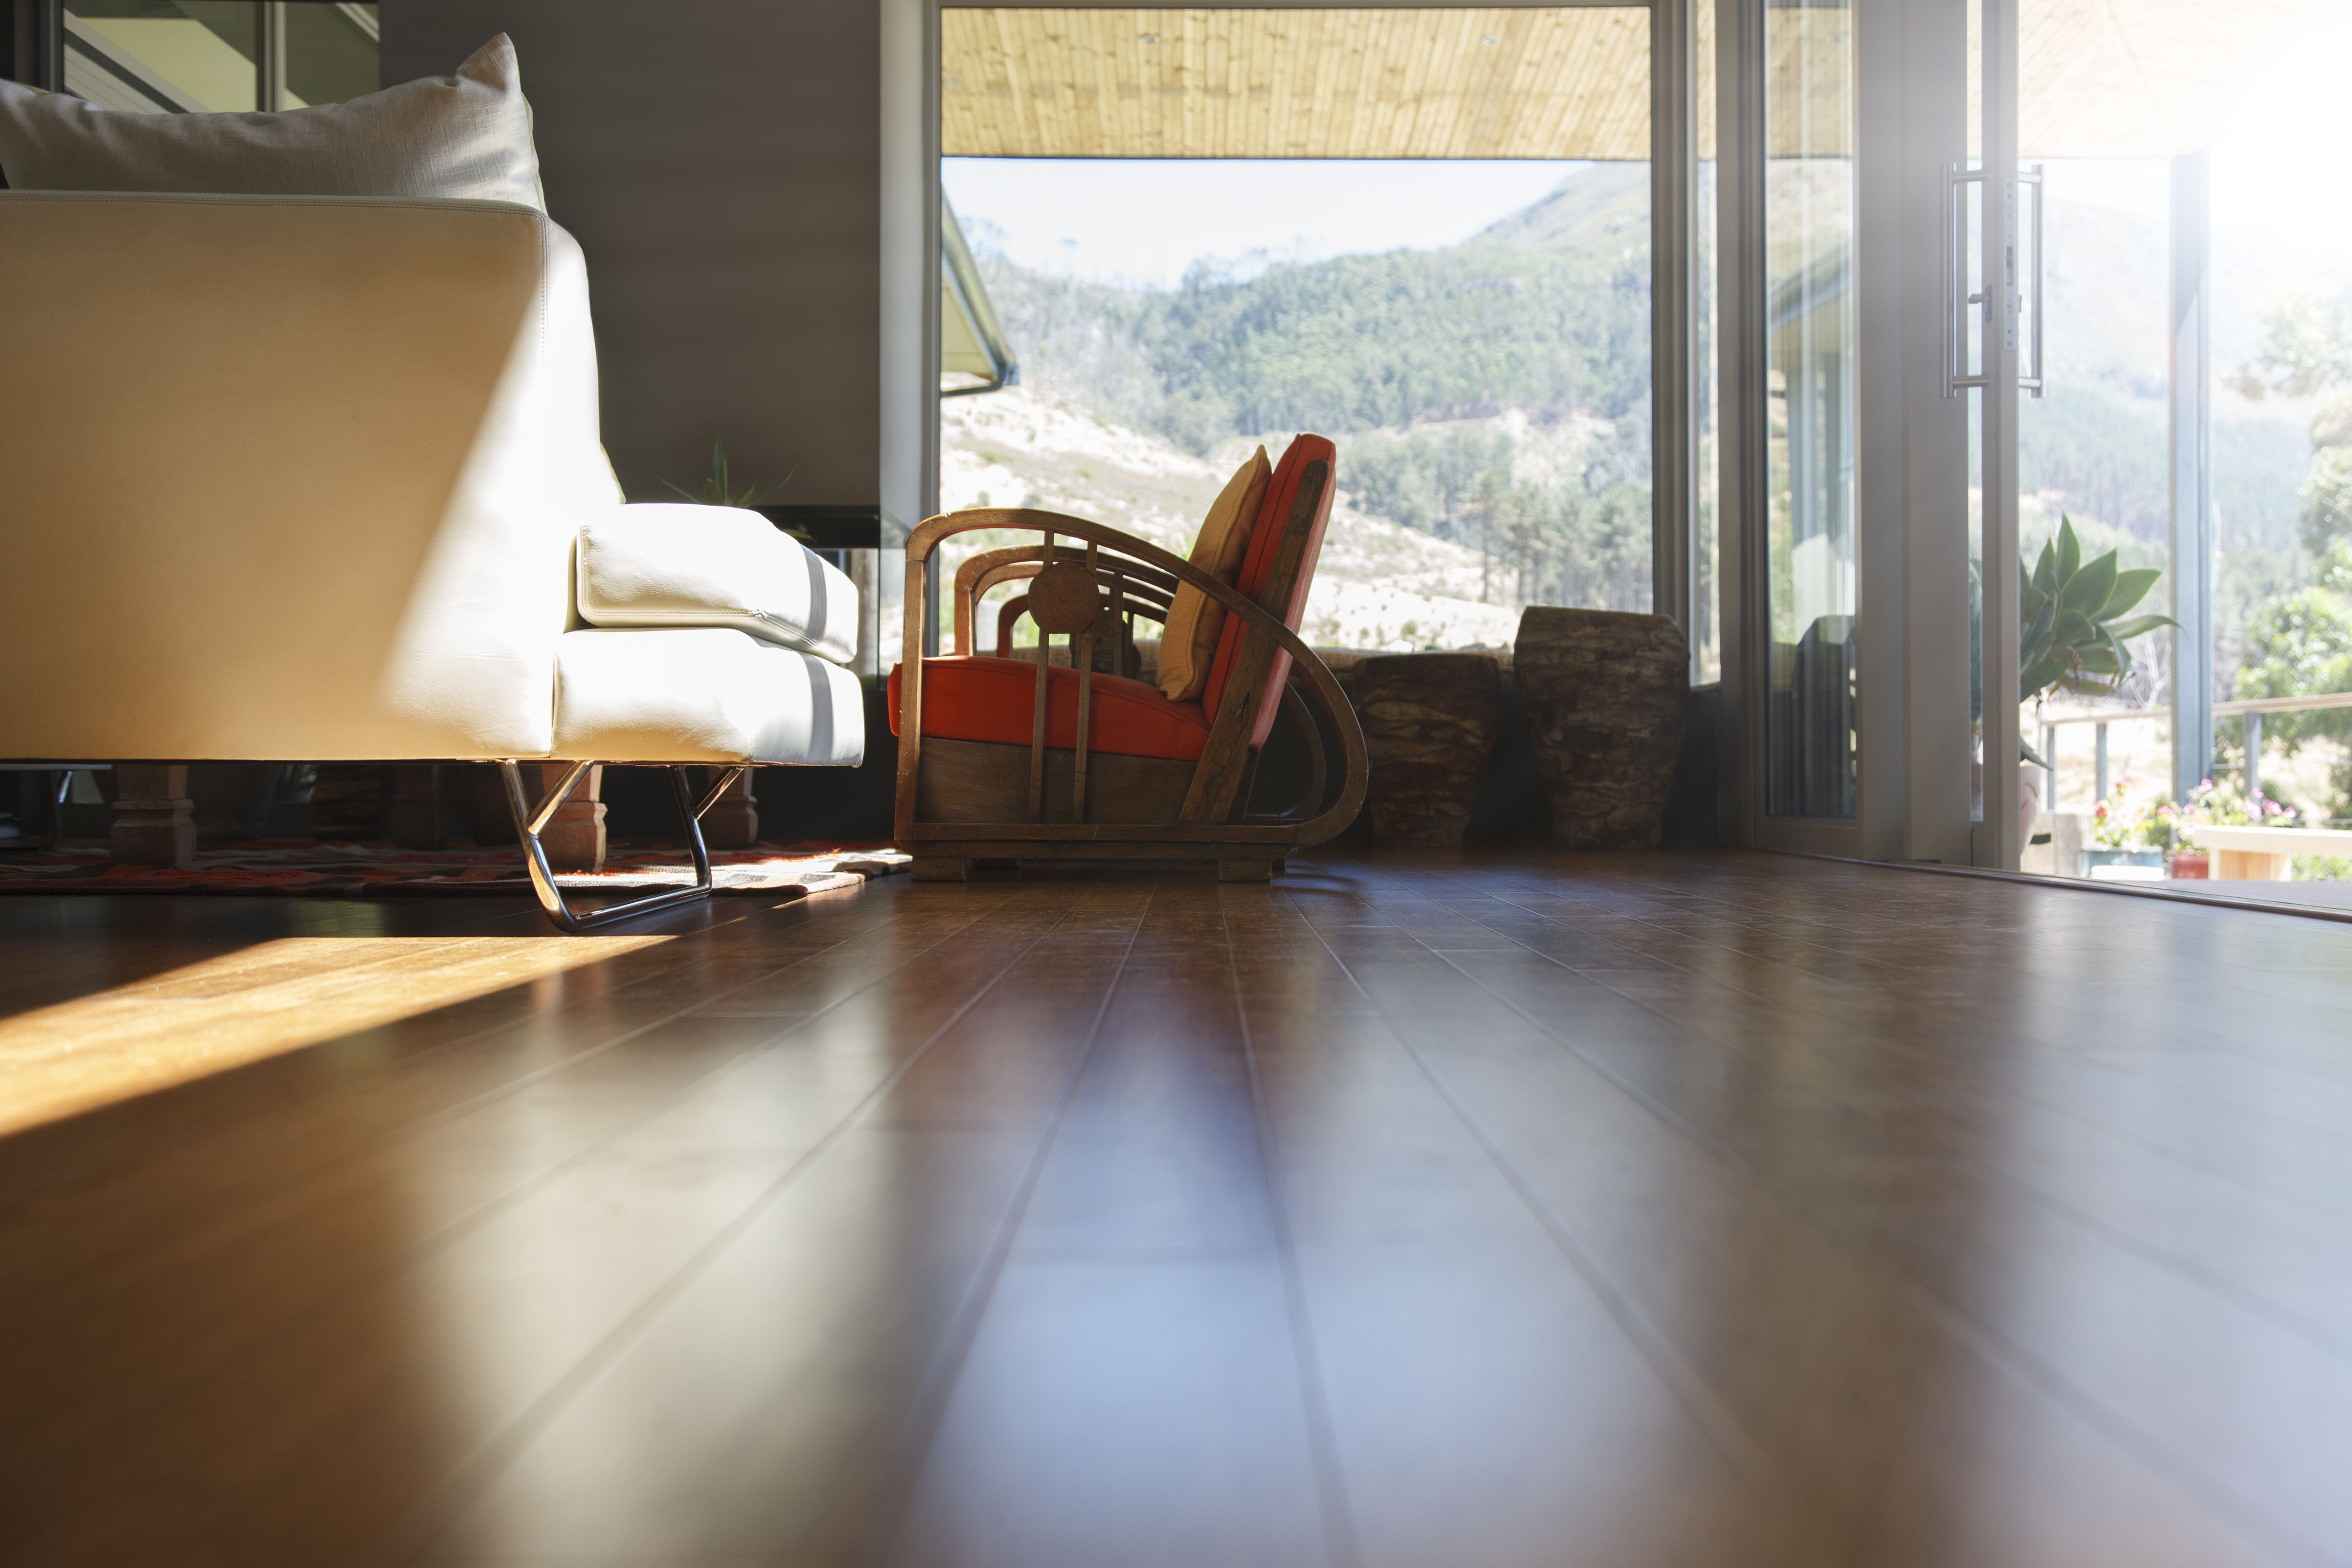 hand scraped hardwood laminate flooring of types of engineered flooring from premium hardwoods for living room interior hard wood floor and sofa 525439899 5a764f241d64040037603c15